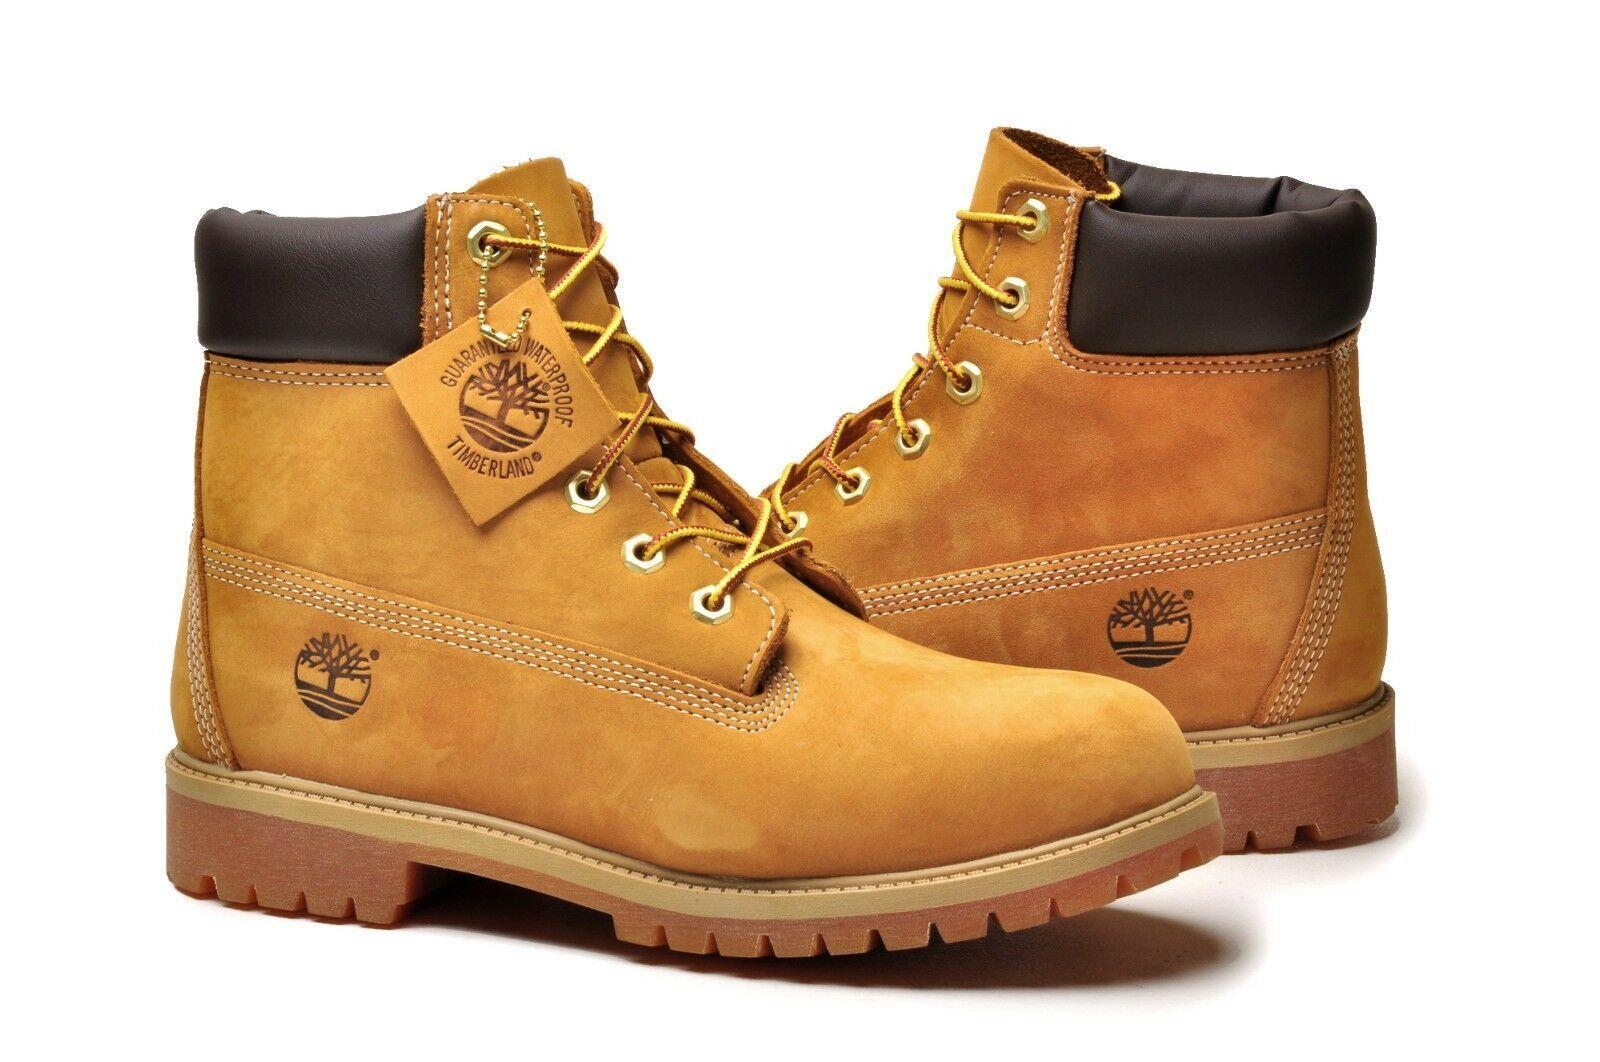 Timberland Womens Premium 6"" Waterproof Leather Boots Shoes - Wheat Nubuck - US 5